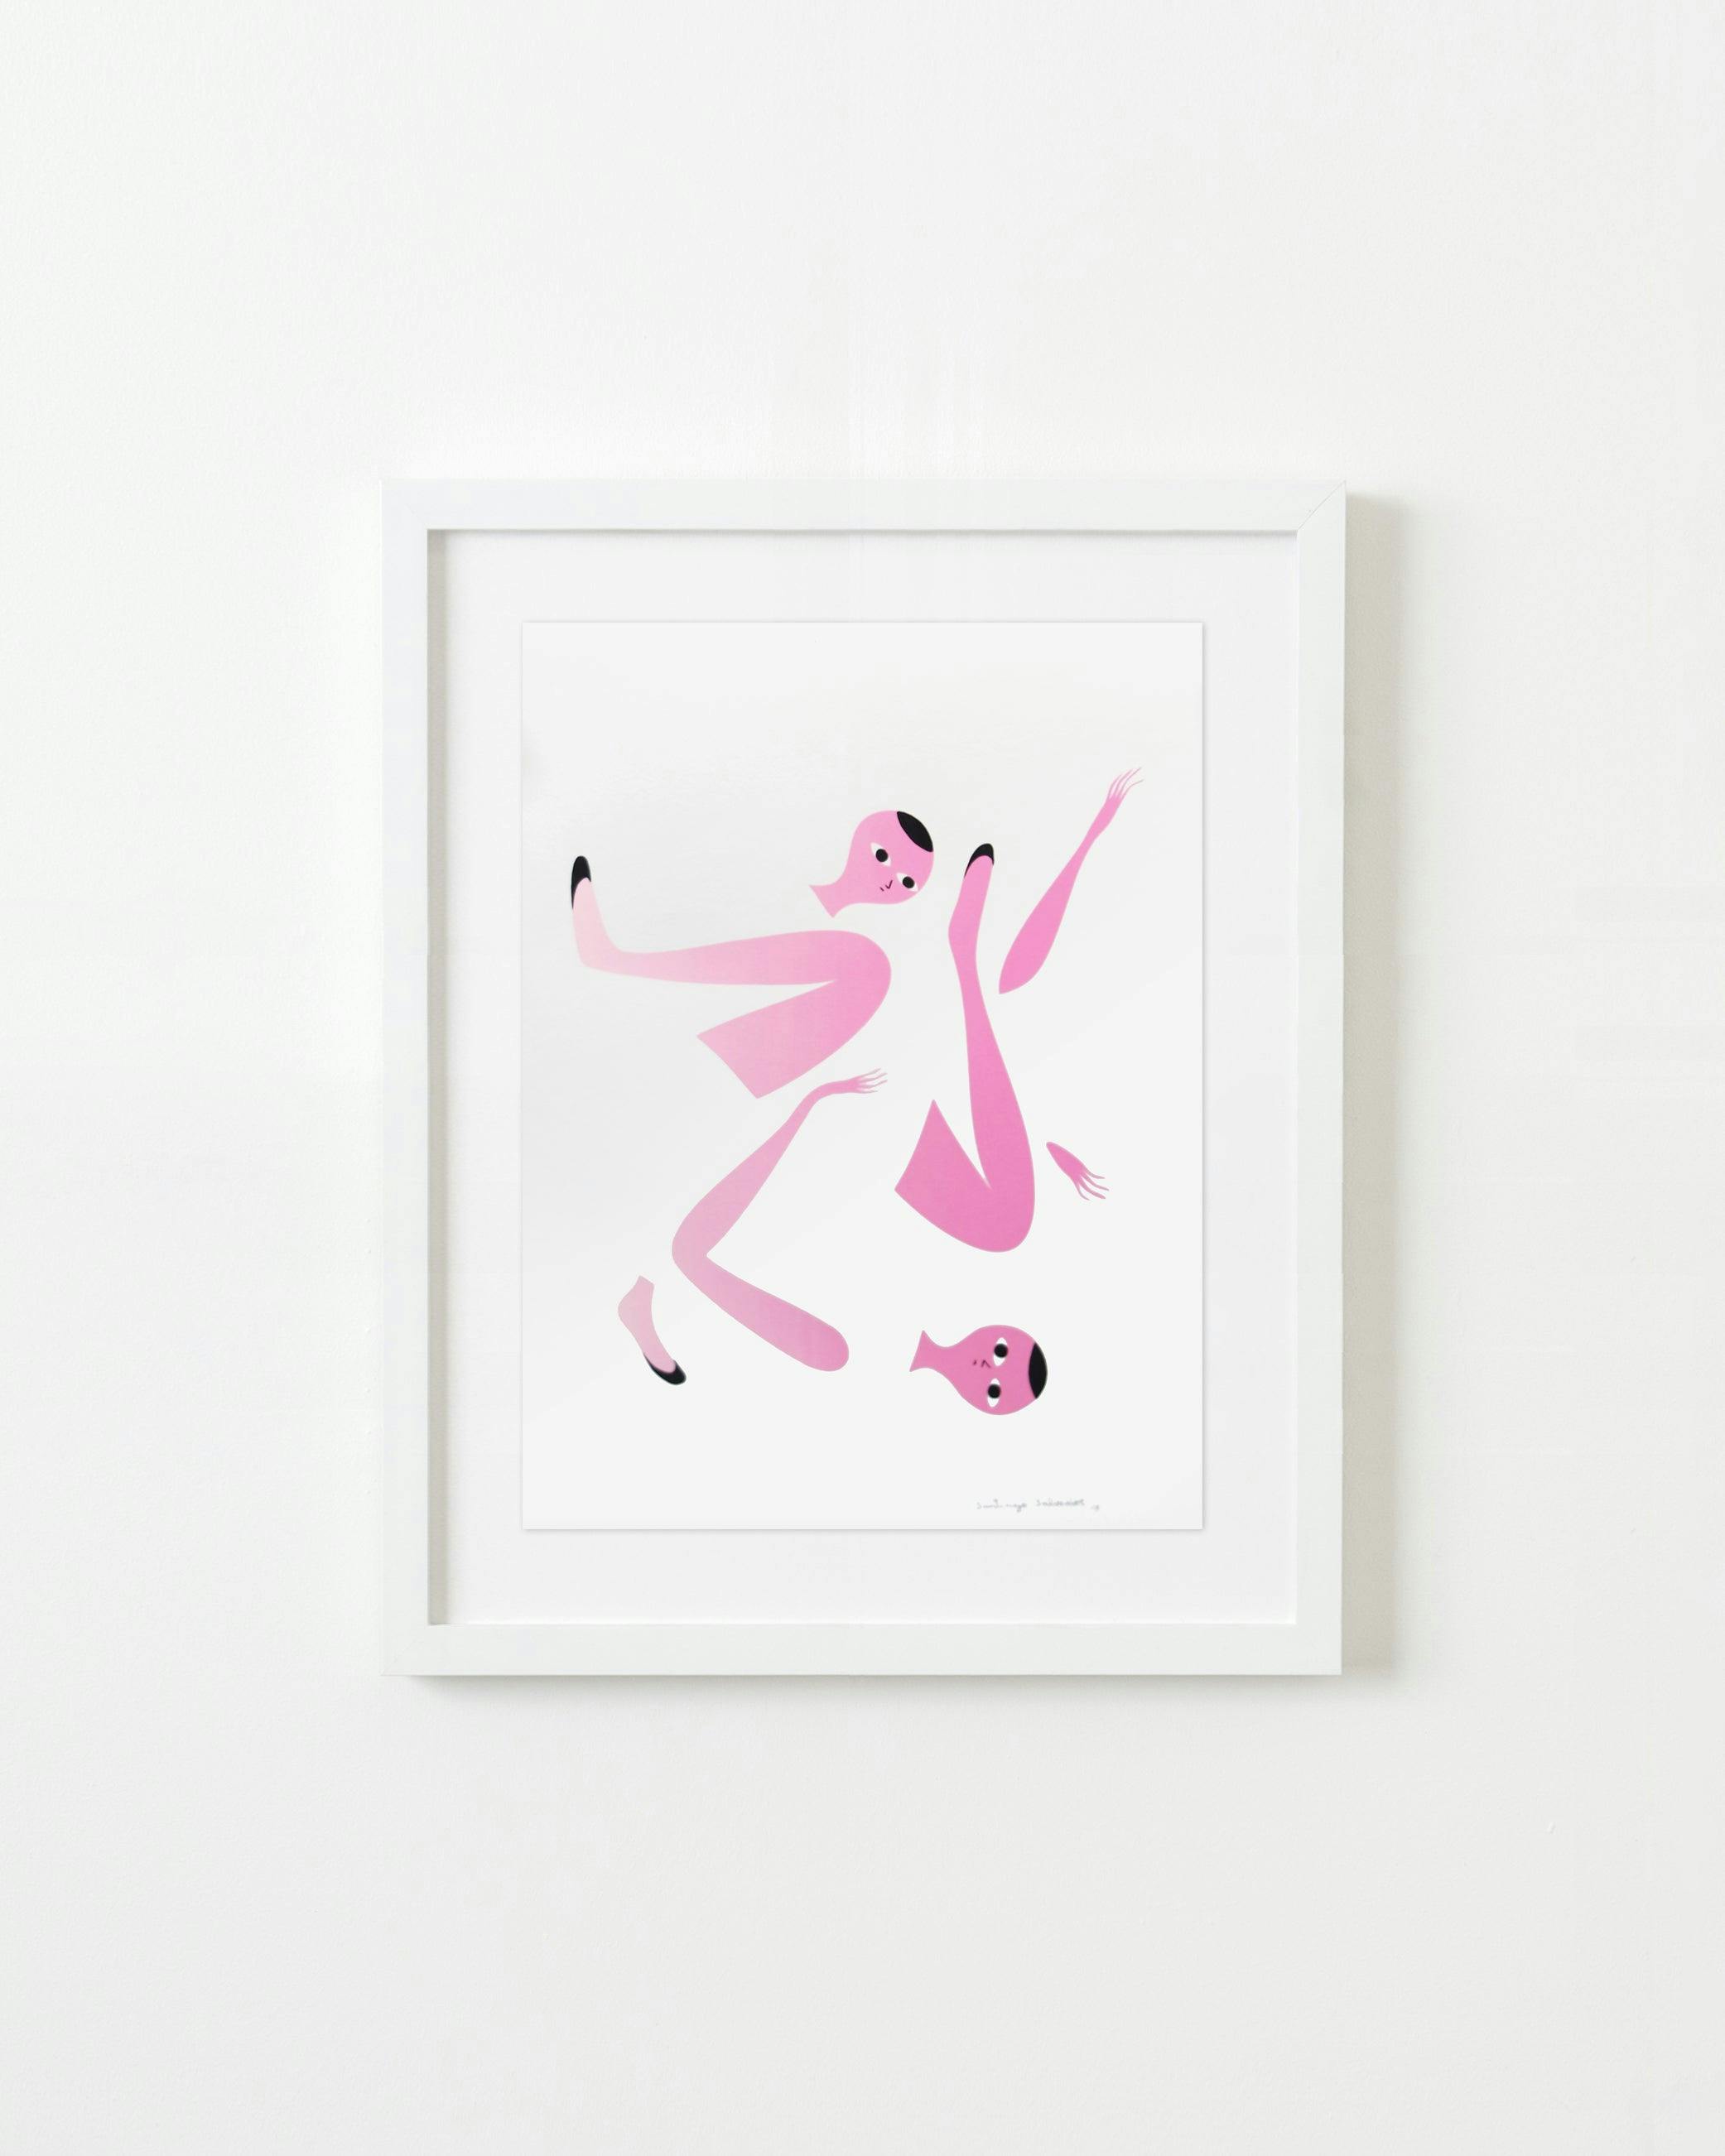 Print by Santiago Ascui titled "Serigrafia Intervenida Pink 2".